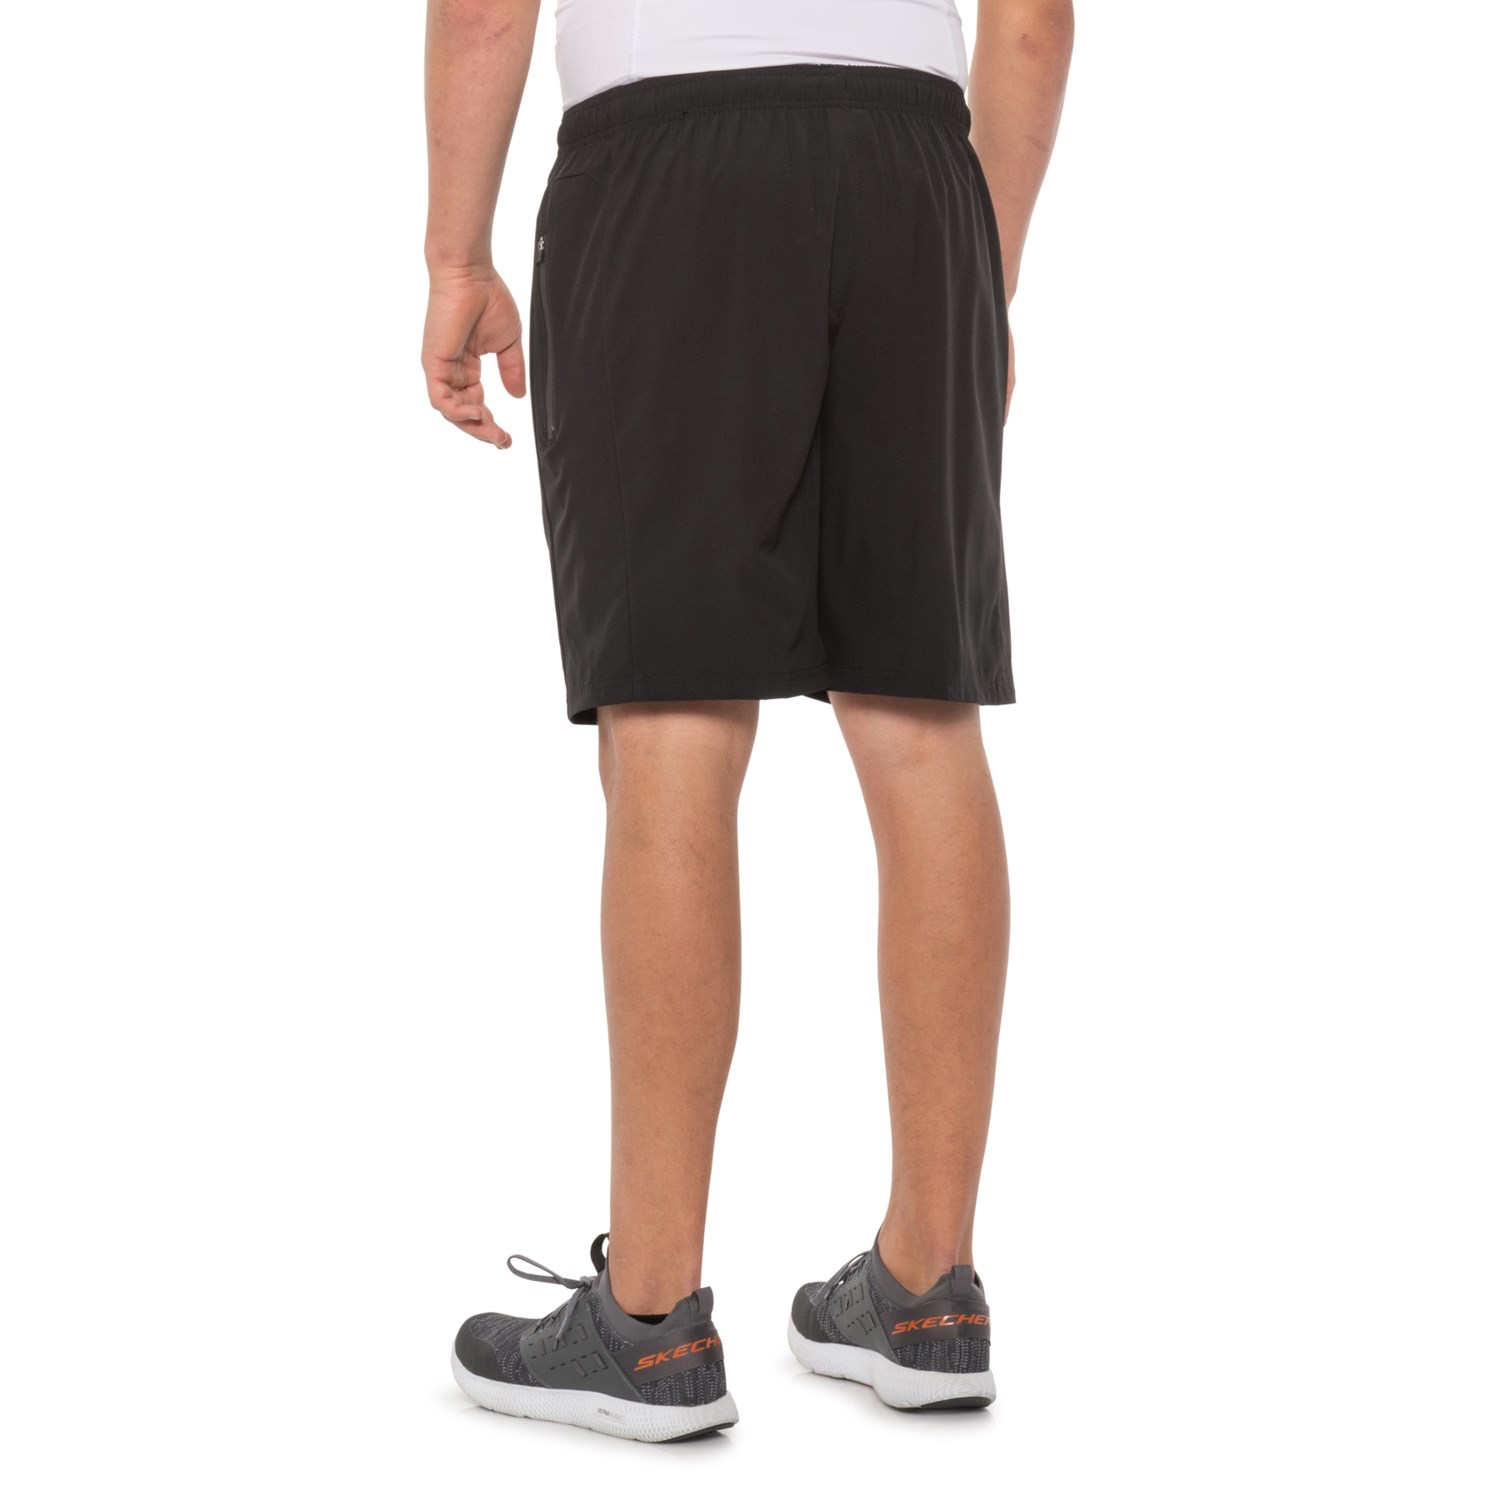 Leg3nd Bonded Pocket Woven Shorts (For Men) - Save 61%